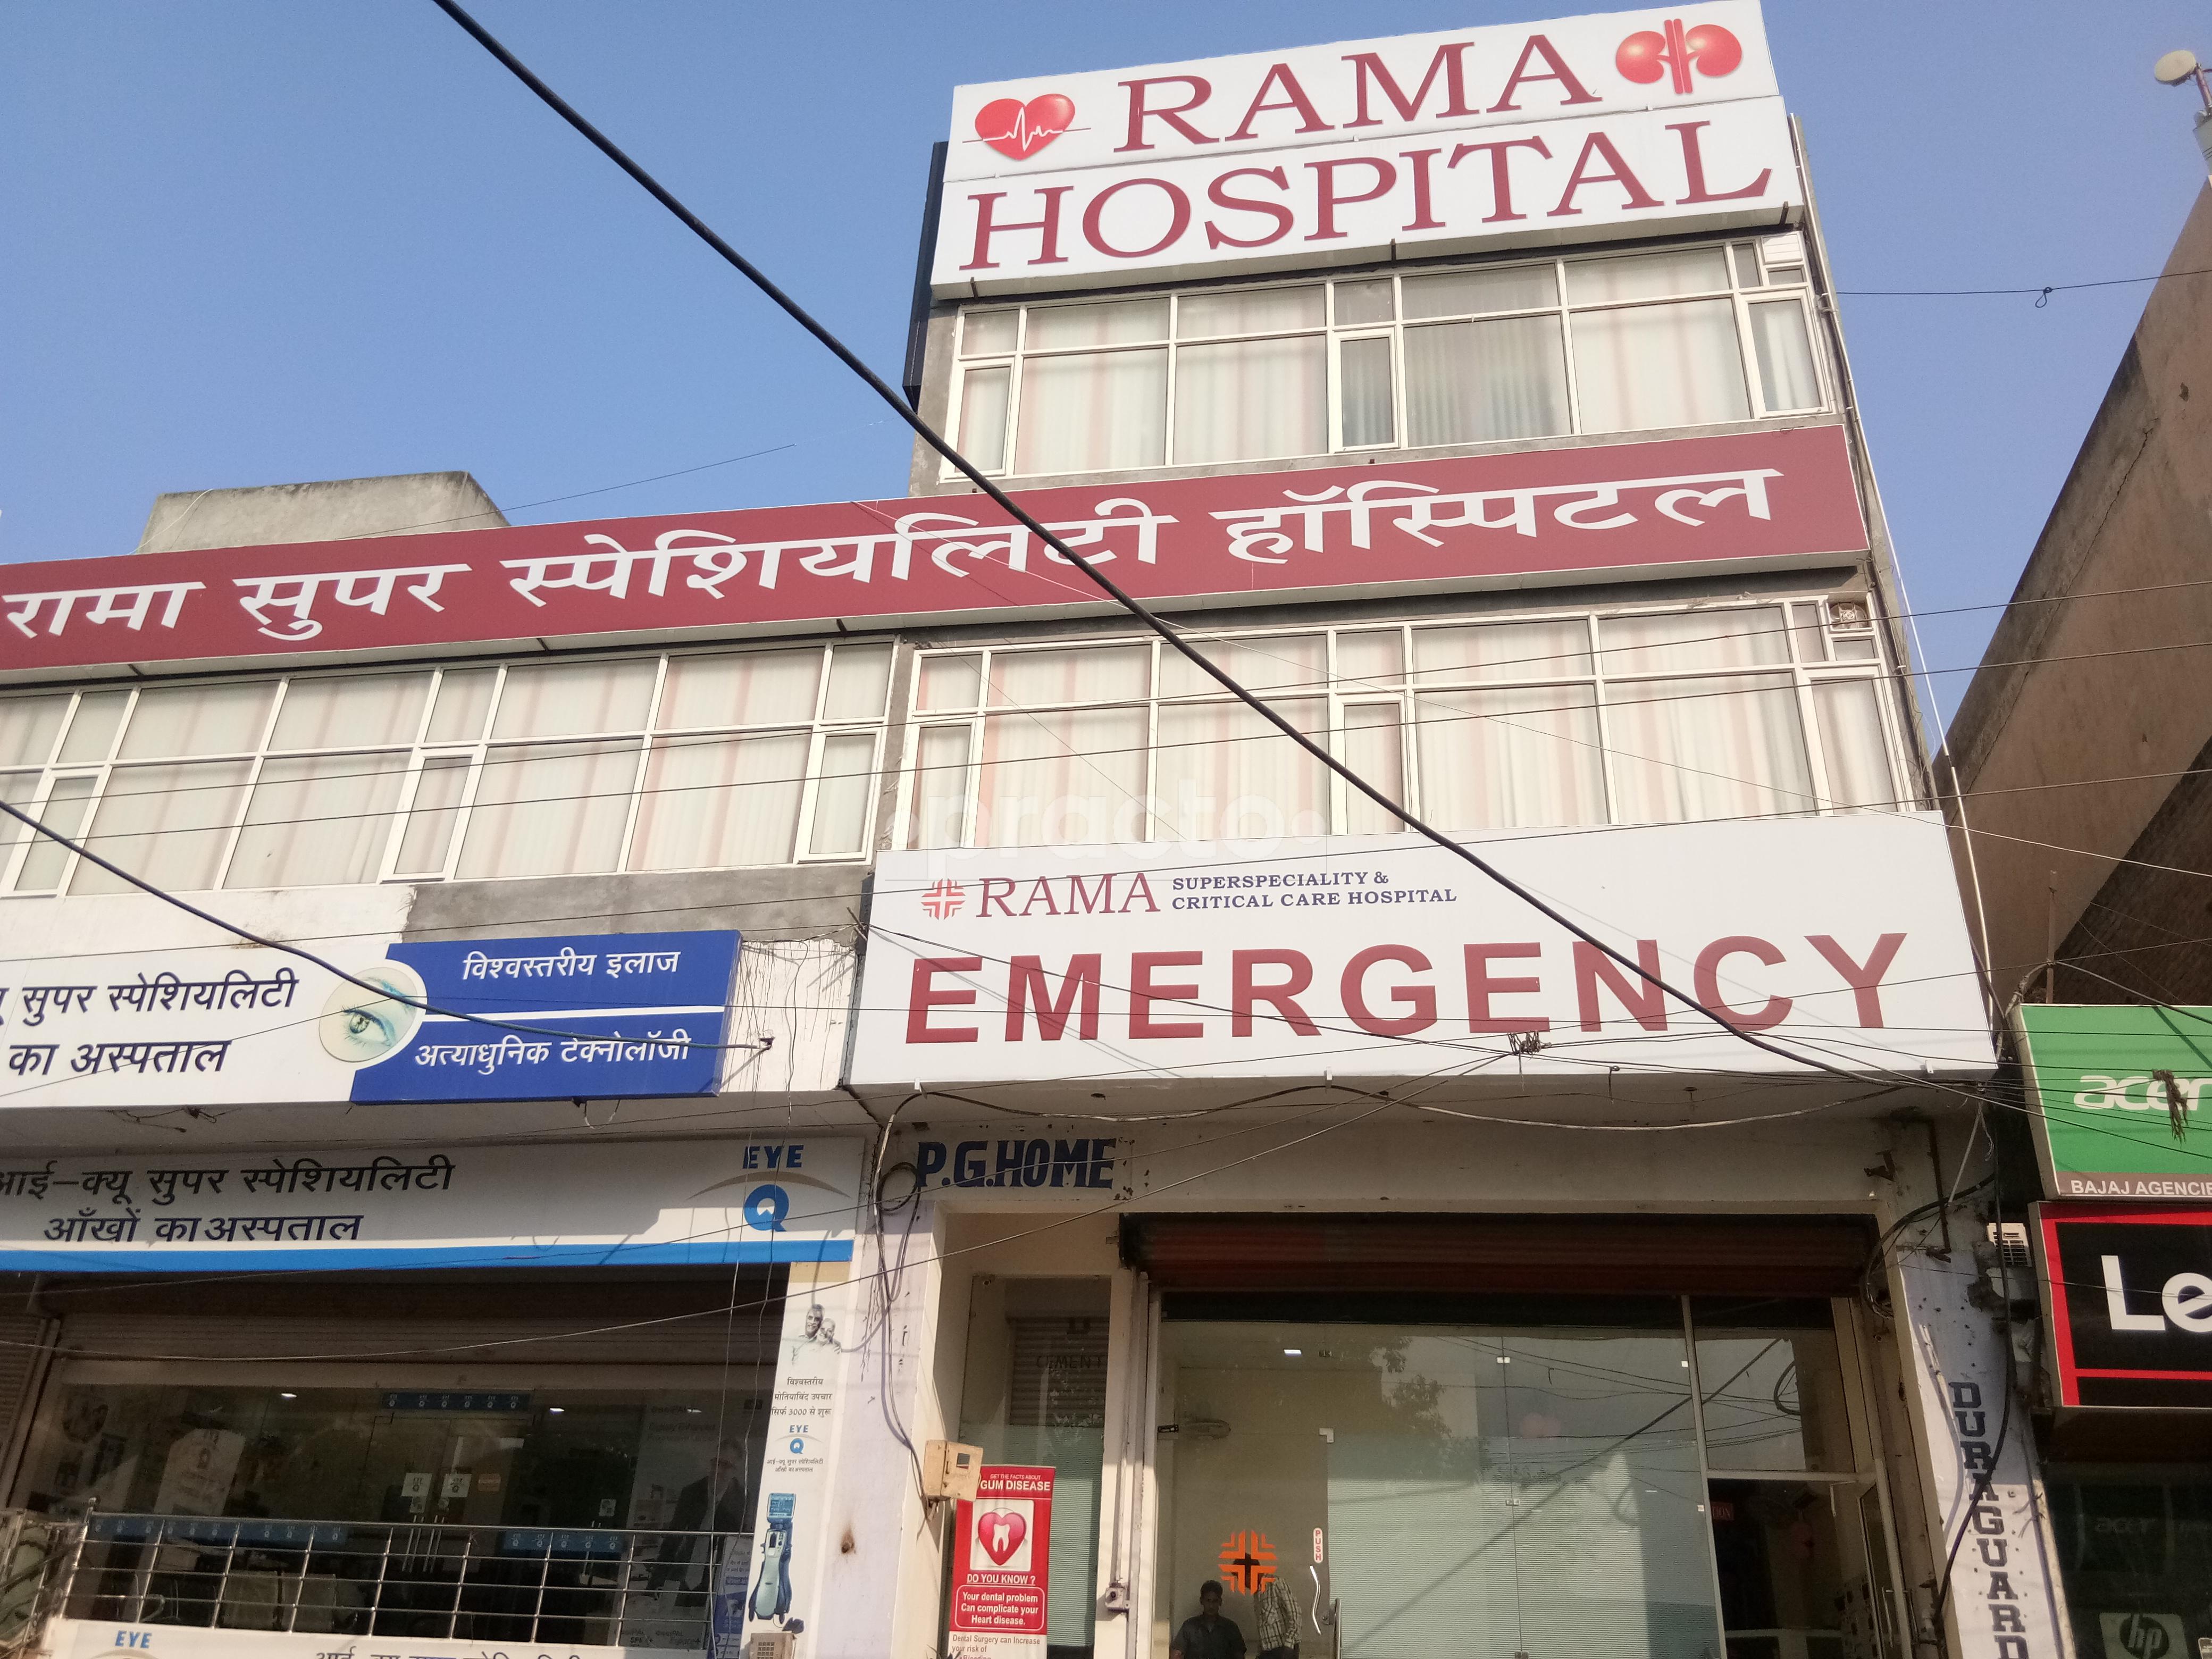 Rama Super Speciality Hospital|Hospitals|Medical Services